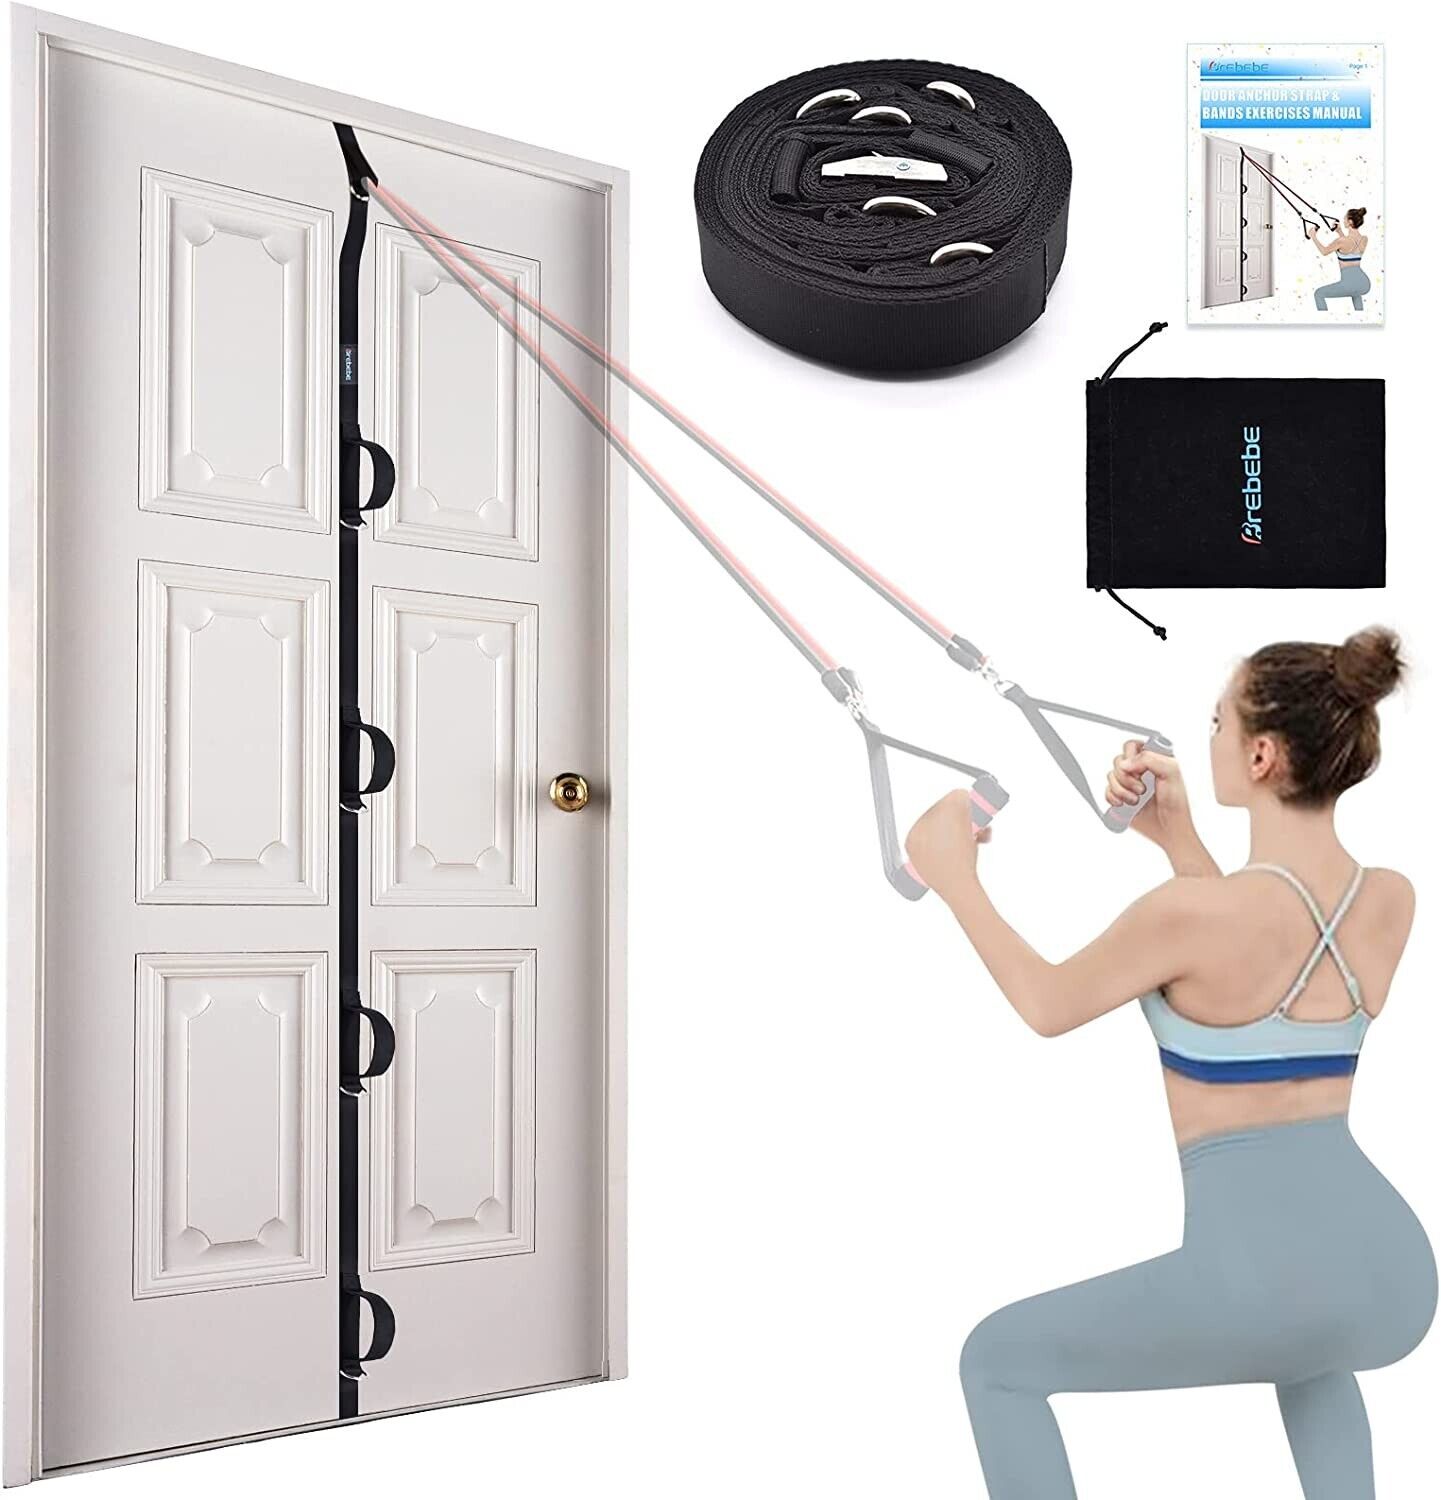 Gek Beeldhouwwerk Samengesteld Door Anchor Strap for Resistance Band Exercises, Gym Attachment for Home  Fitness | eBay